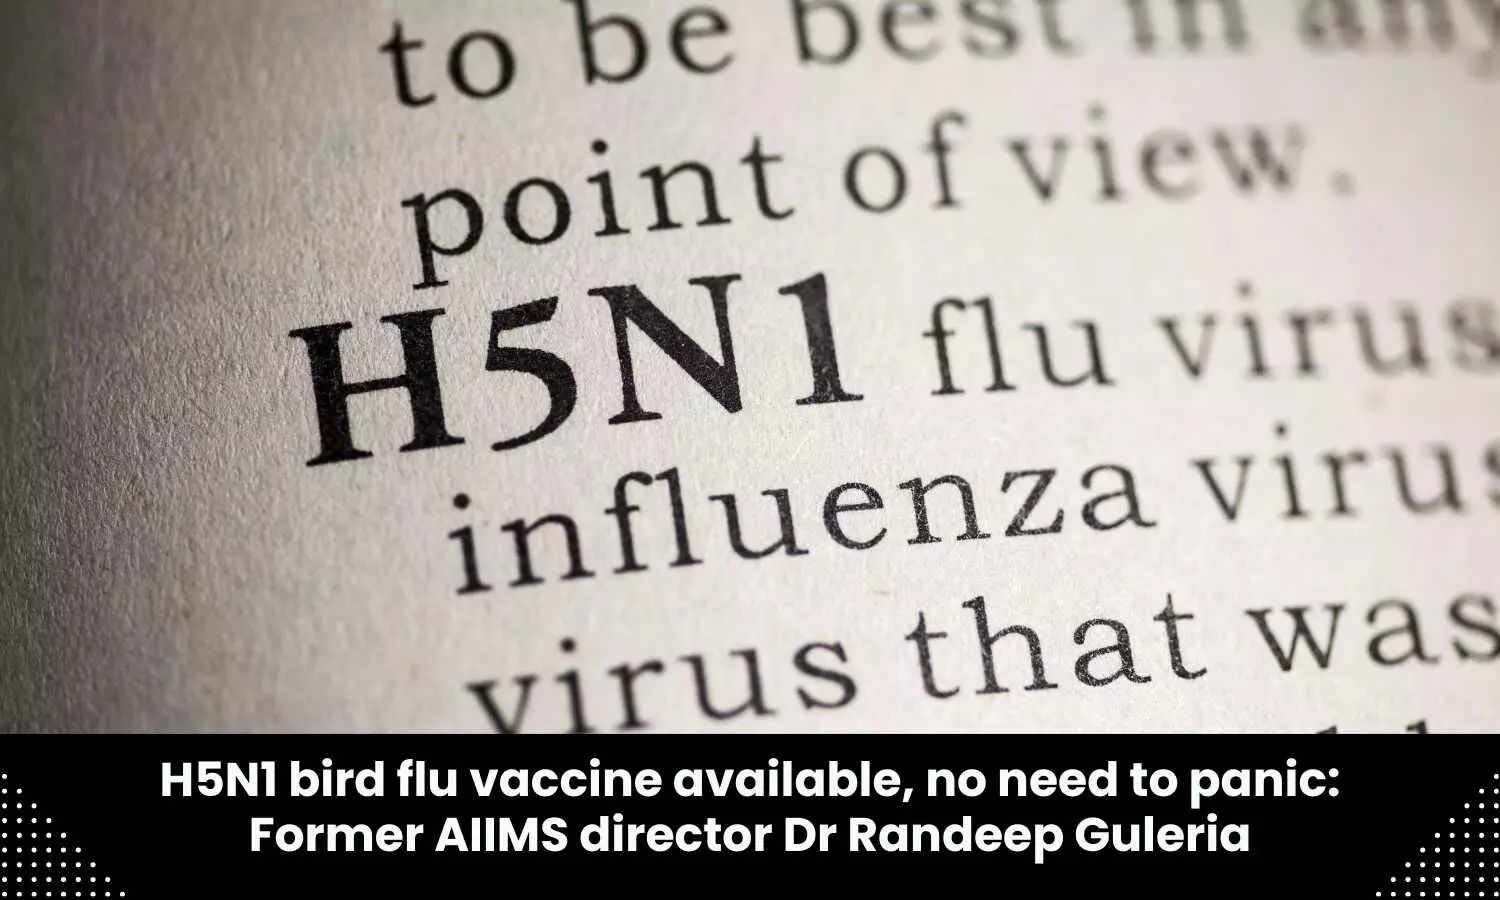 No need to panic, H5N1 bird flu vaccine available: Dr Randeep Guleria